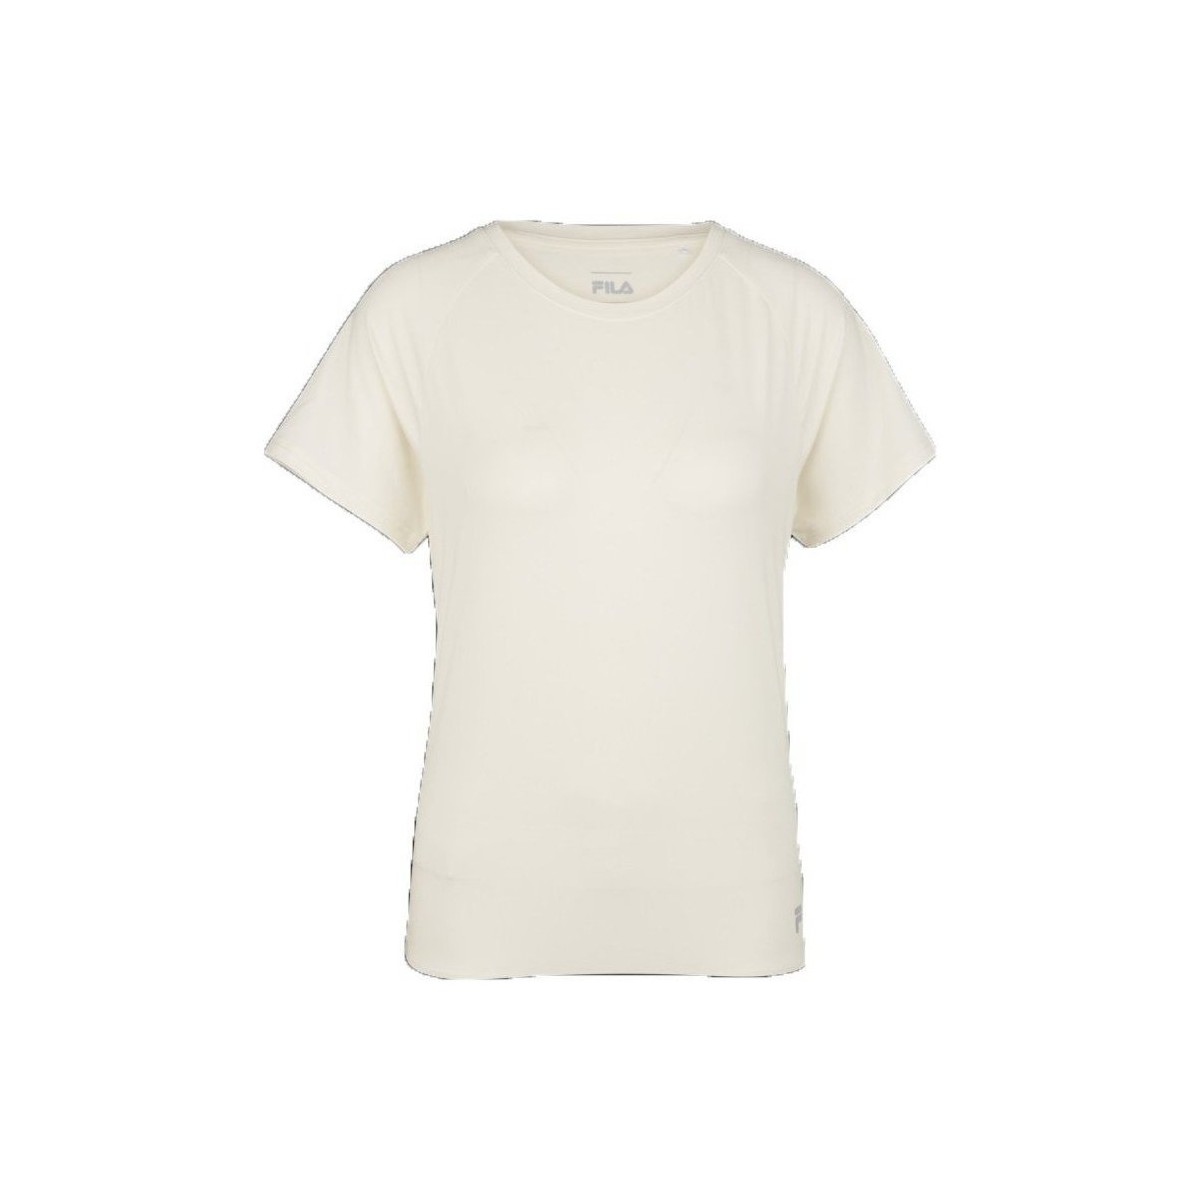 Abbigliamento Donna T-shirt maniche corte Fila T-shirt Donna Coria Bianco